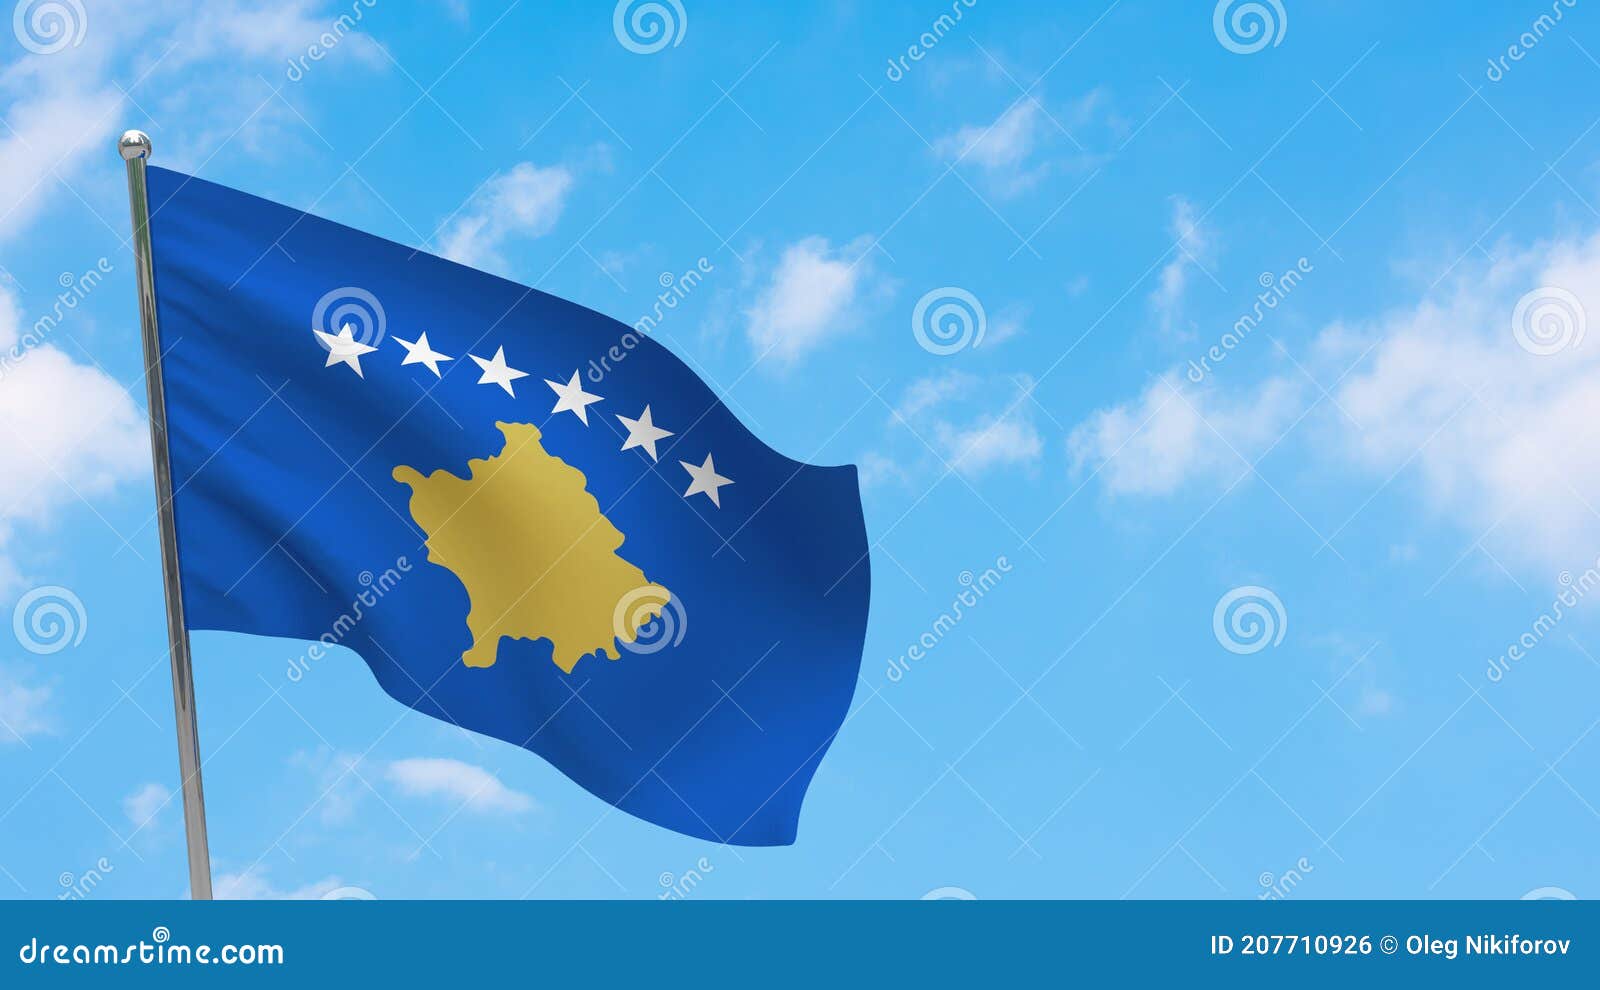 https://thumbs.dreamstime.com/z/kosovo-flagge-auf-polen-blauer-himmel-nationalflagge-aus-dem-207710926.jpg